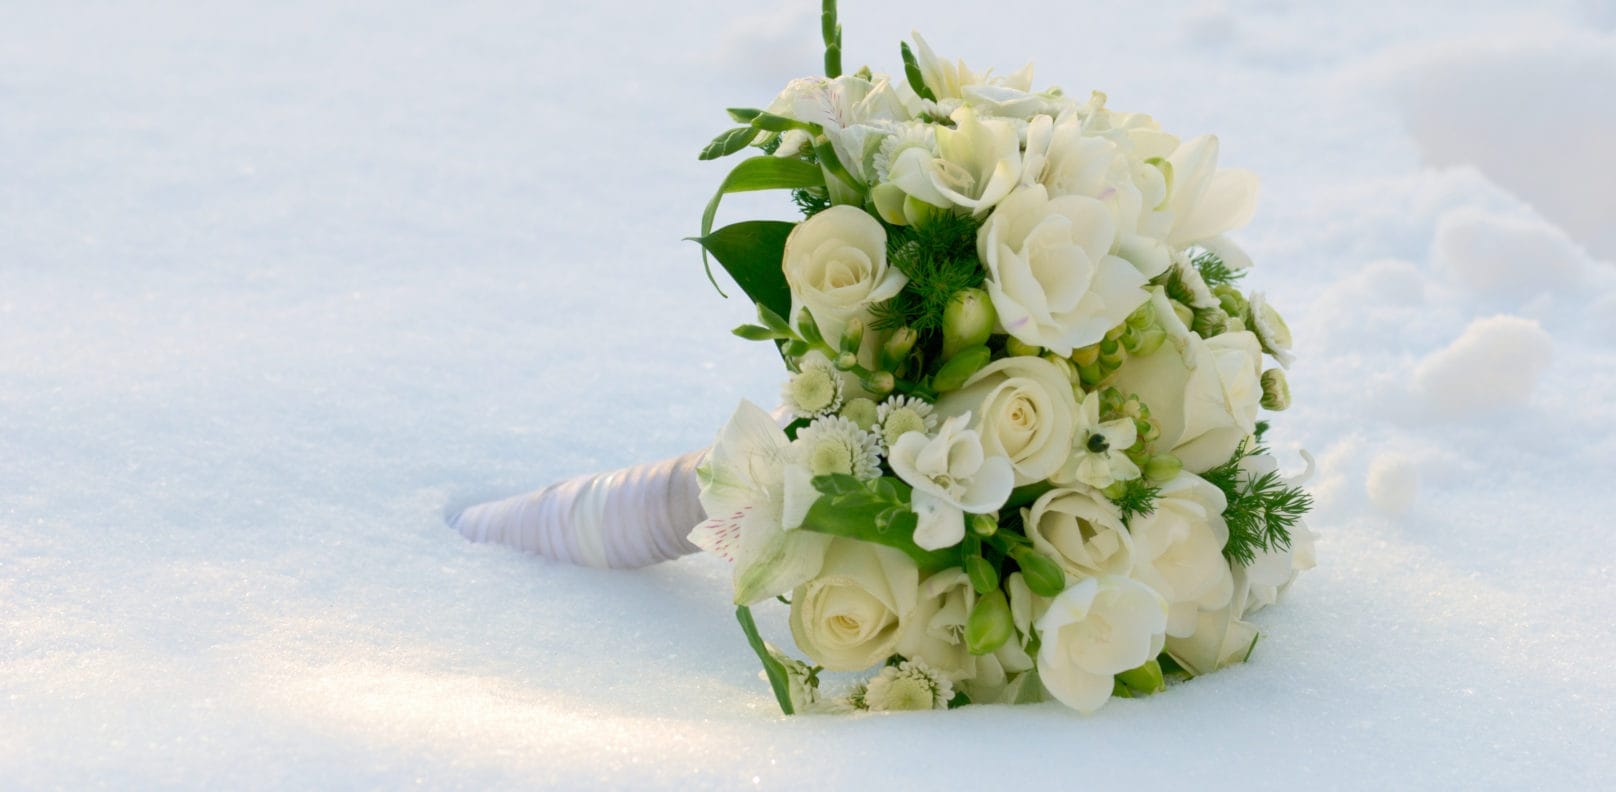 Winter wedding bouquet